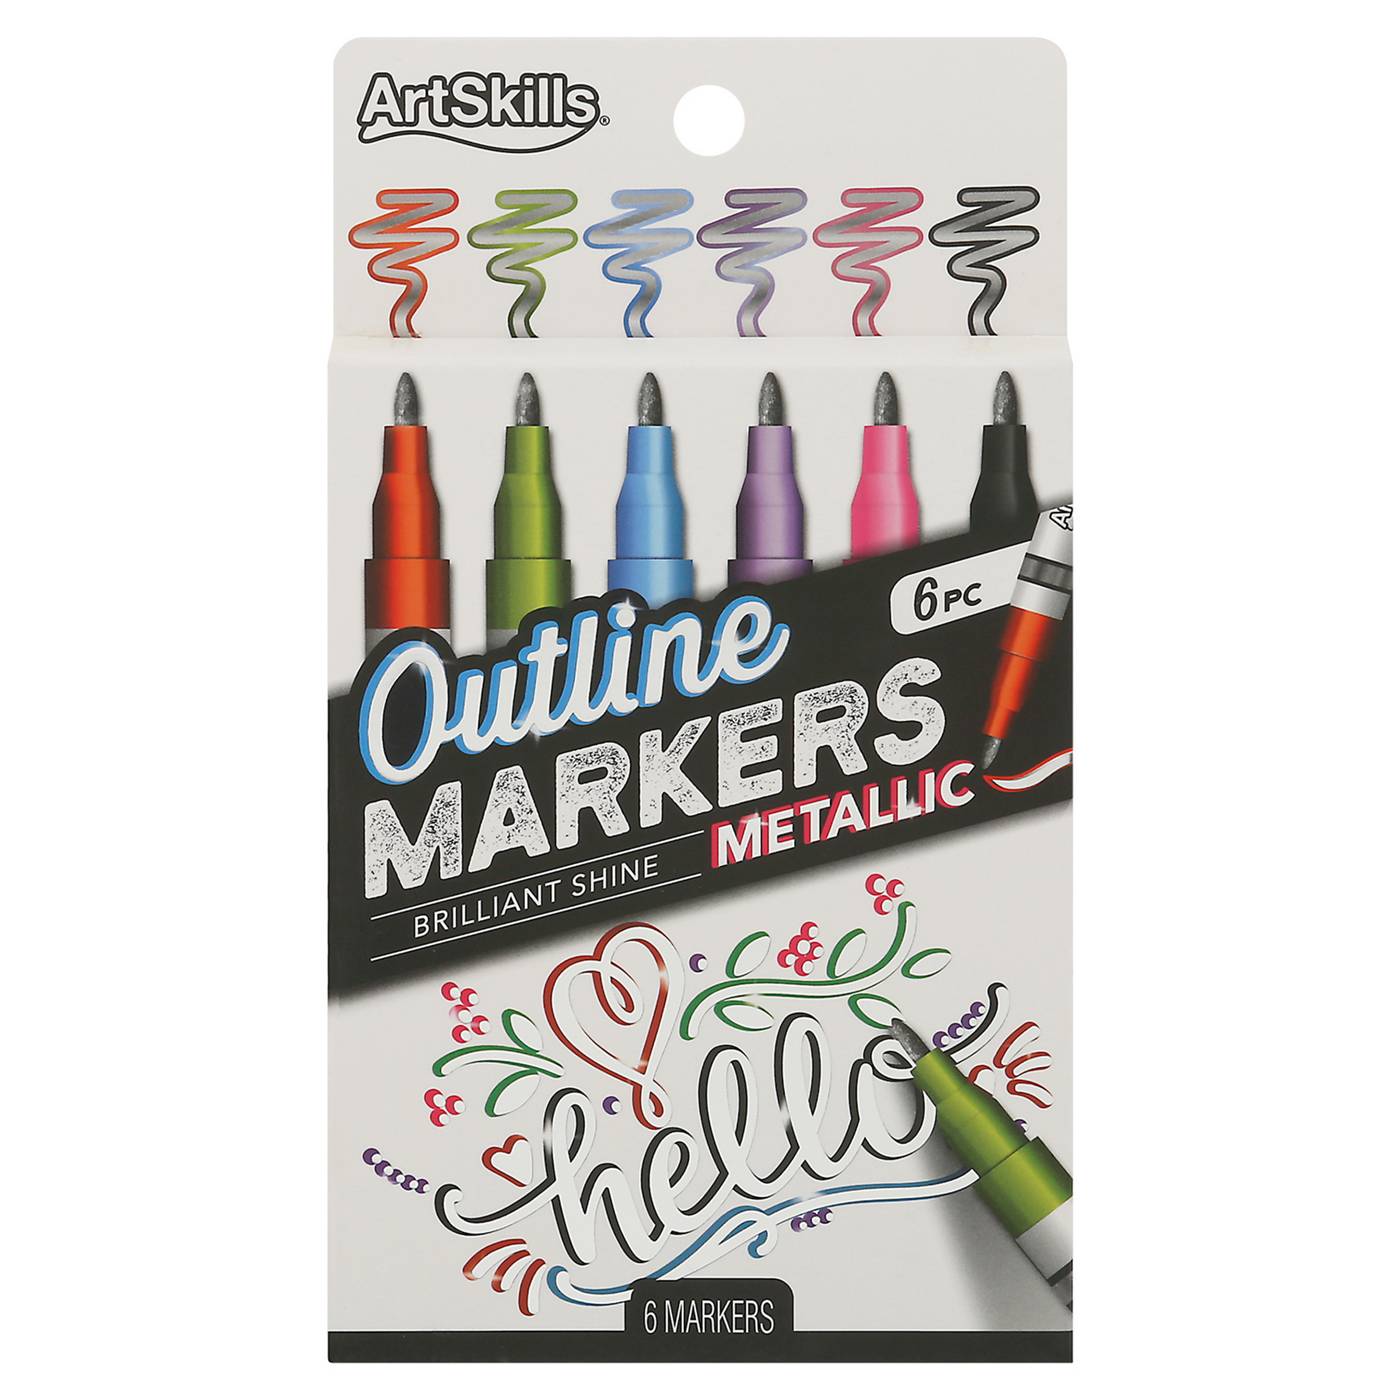 Crayola Metallic Outline Paint Markers, Assorted Colors, Art Supplies, 6  Count & Metallic Markers, 8 Count 